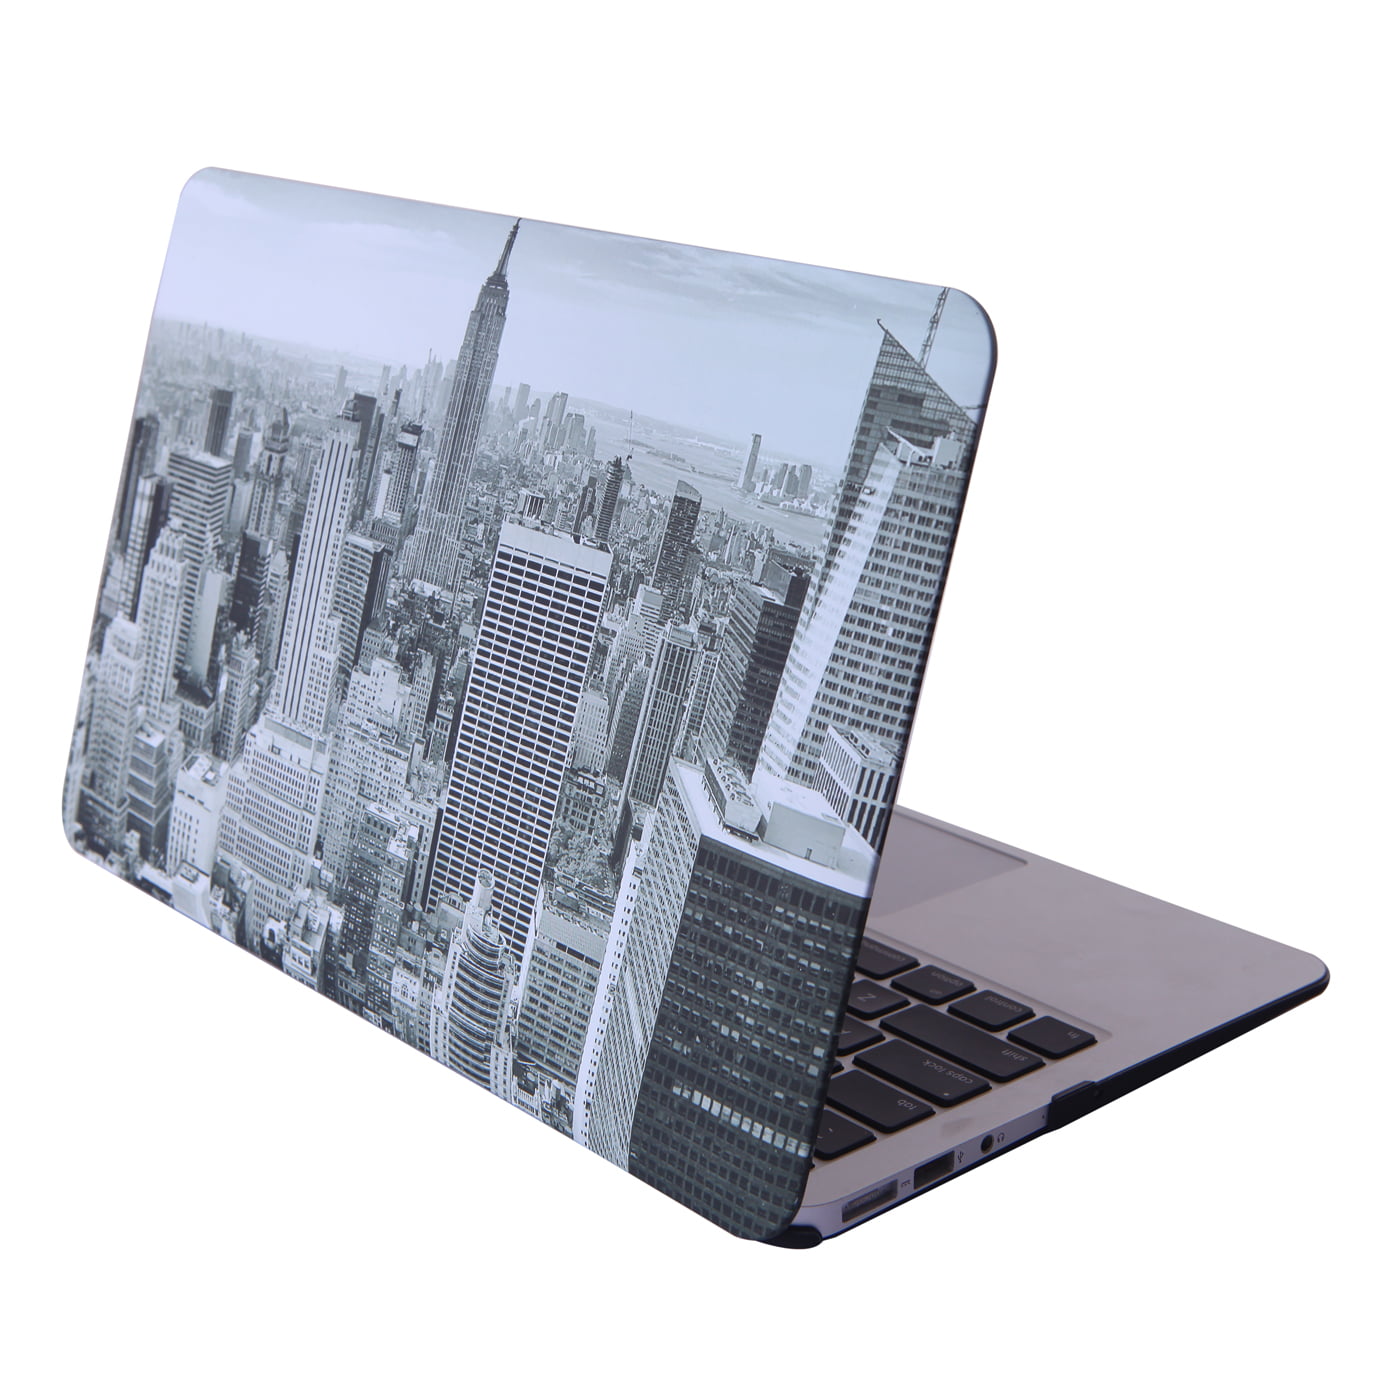 Hde Macbook Air 13 Case Hard Shell Cover Designer Art Pattern Fits 13 3 Apple Mac Air Notebook Model A1369 A1466 New York Skyline Walmart Com Walmart Com,Luxury Classic Bathroom Design